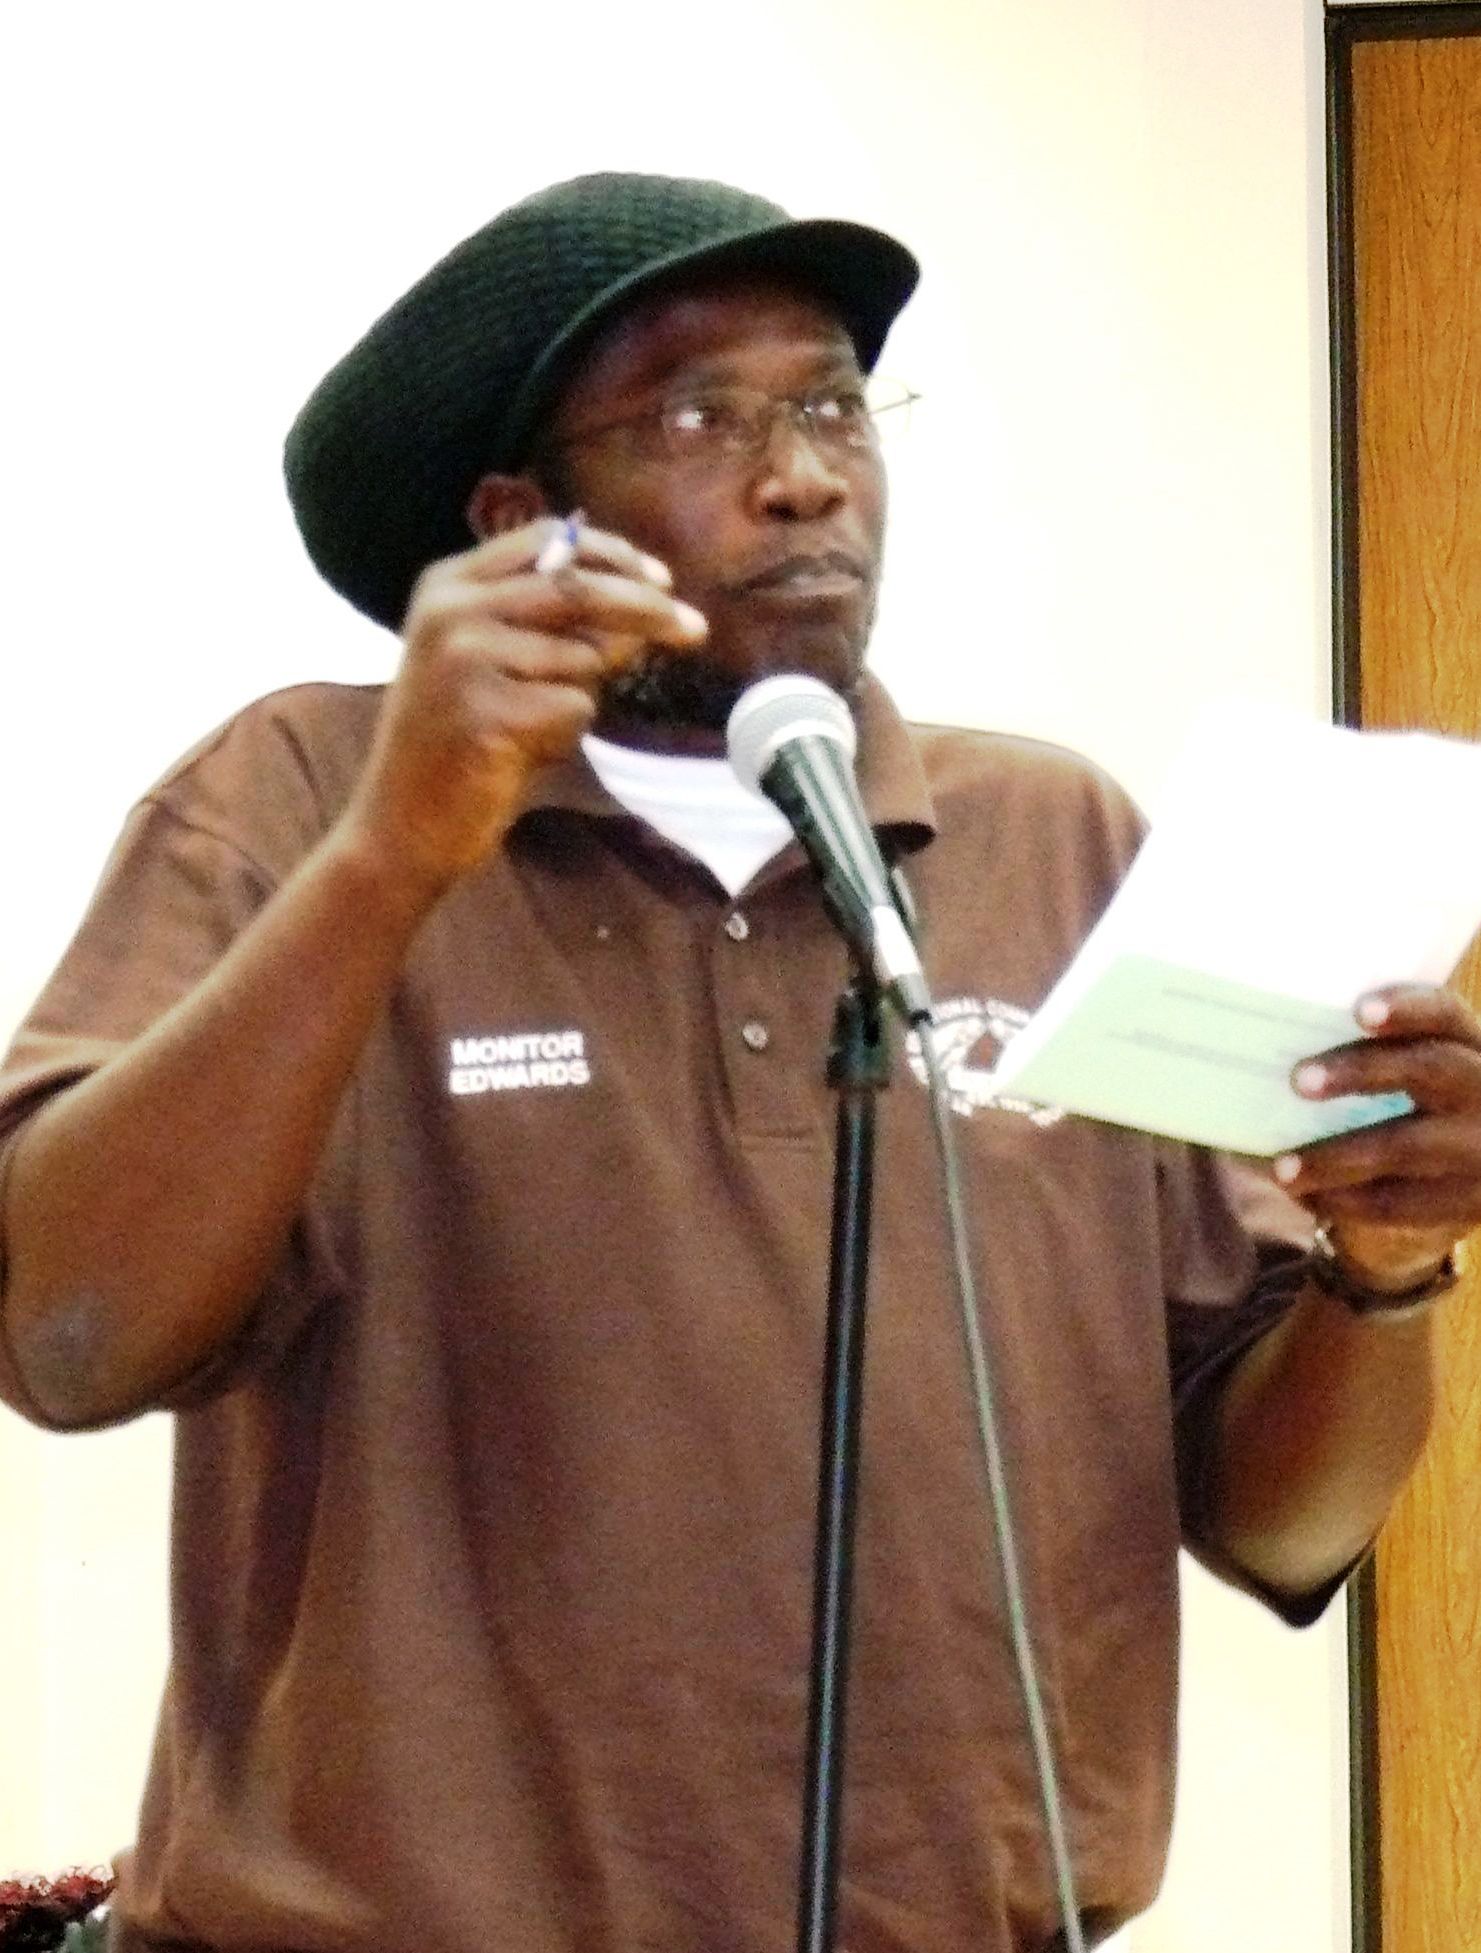 St. Croix resident Percival Edwards asks a question at Wednesday's senatorial forum.